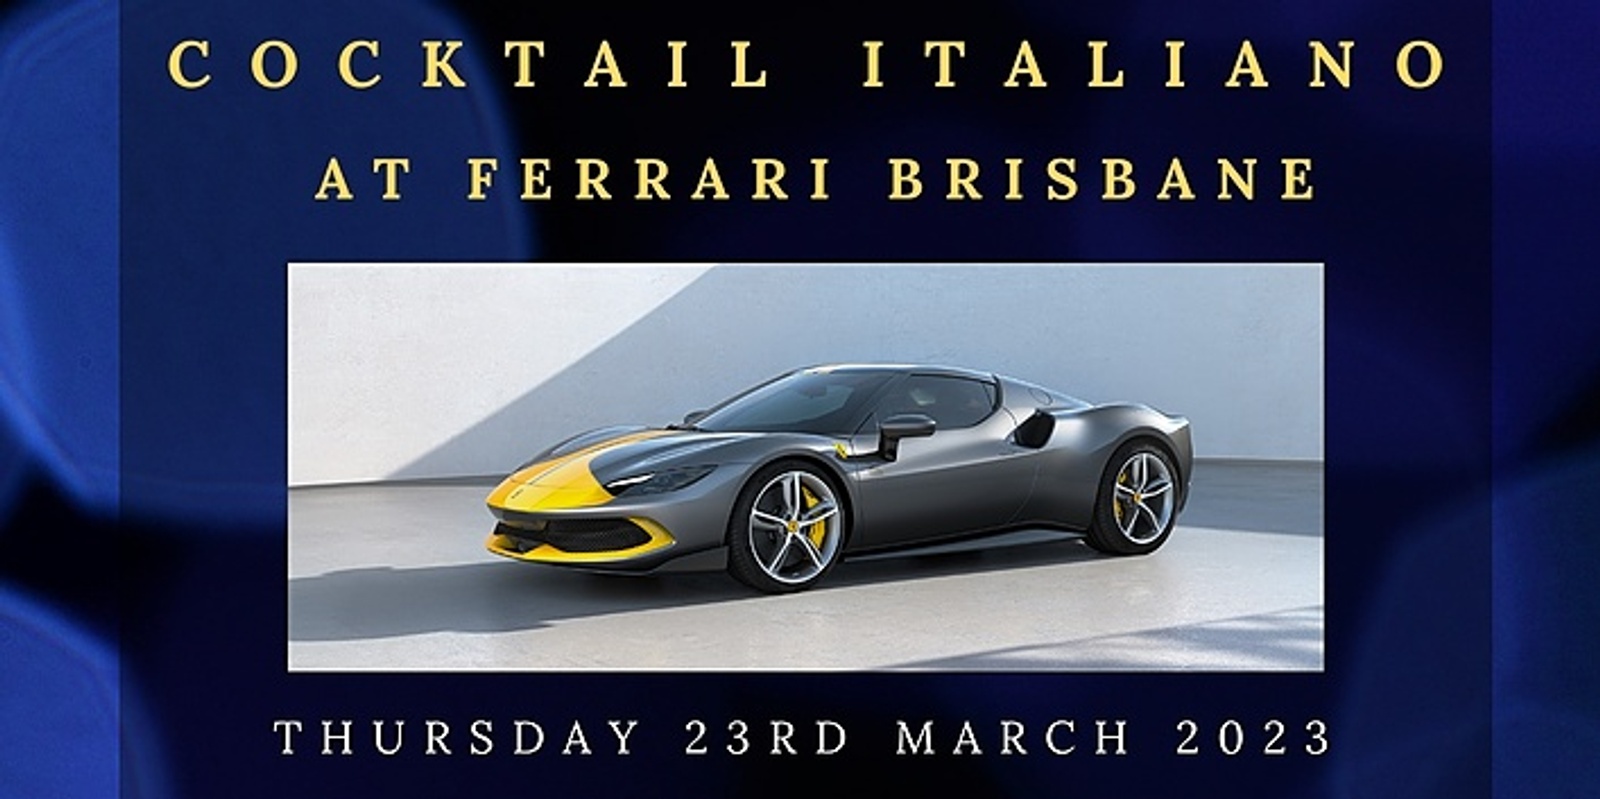 Cocktail Italiano at Ferrari Brisbane